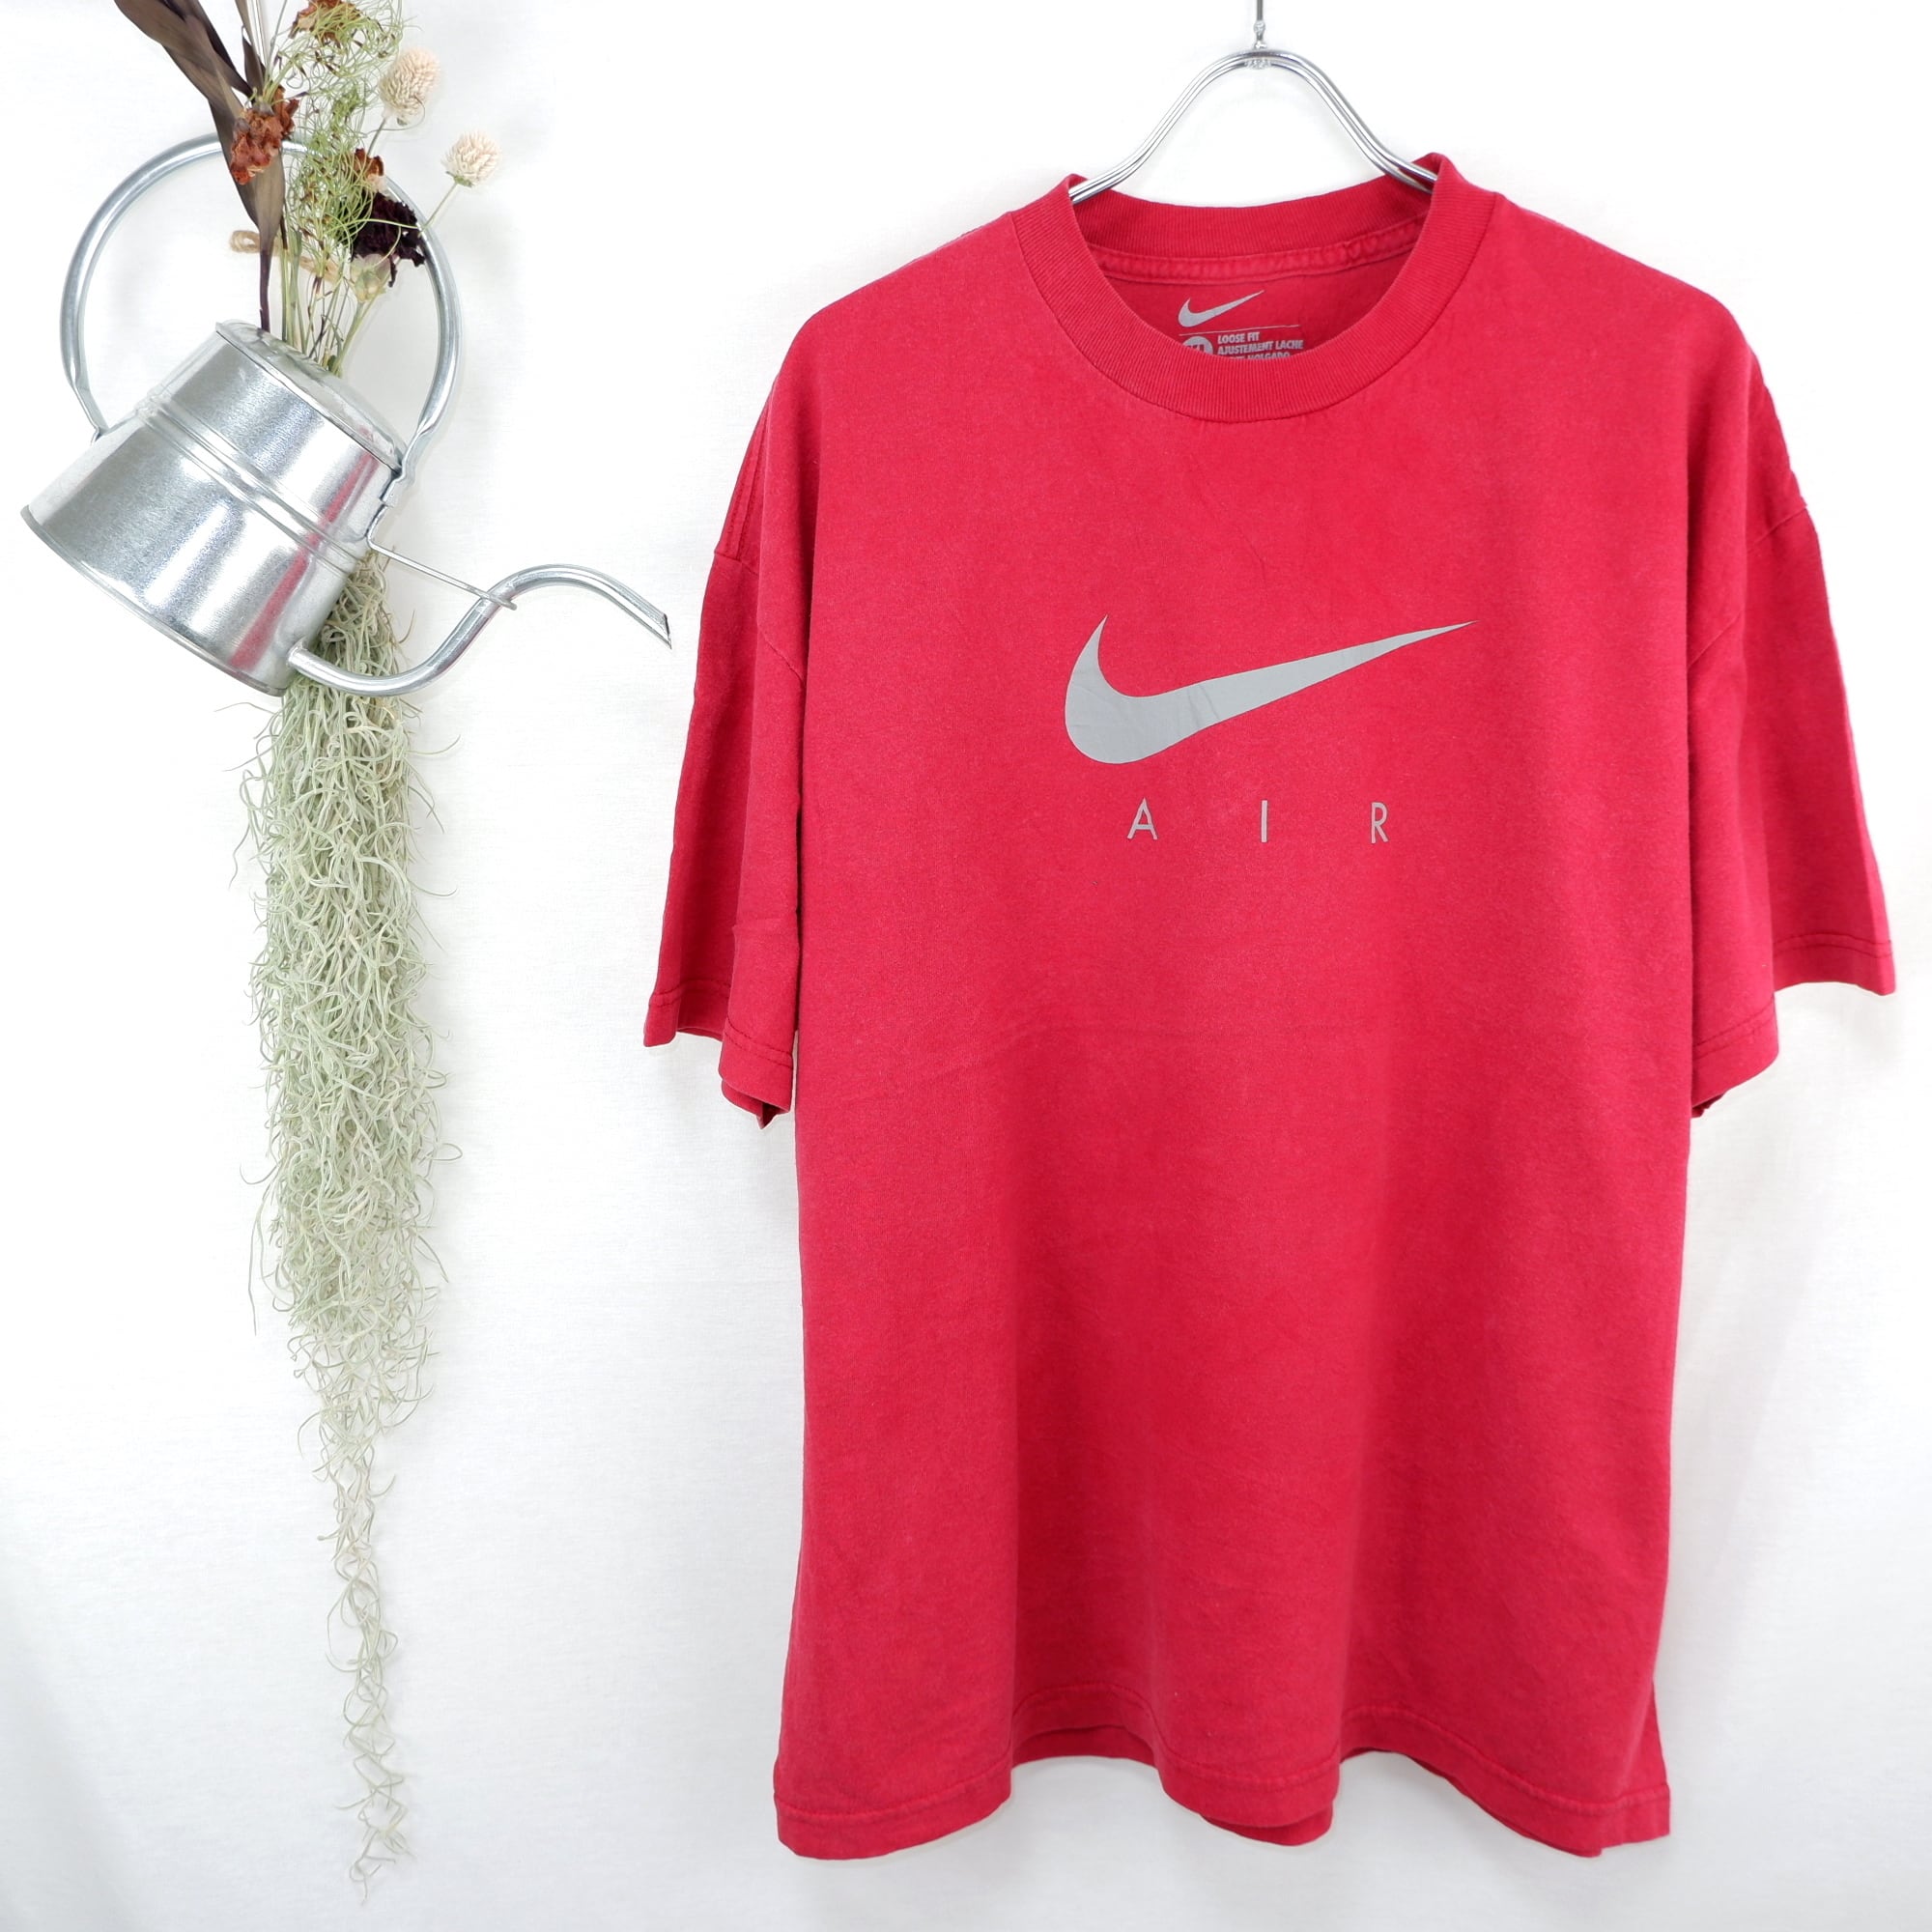 [XL] NIKE AIR Red Tee | ナイキ エアー 赤 Tシャツ | きれいめや90sのメンズ古着専門店jo-Ro powered by  BASE